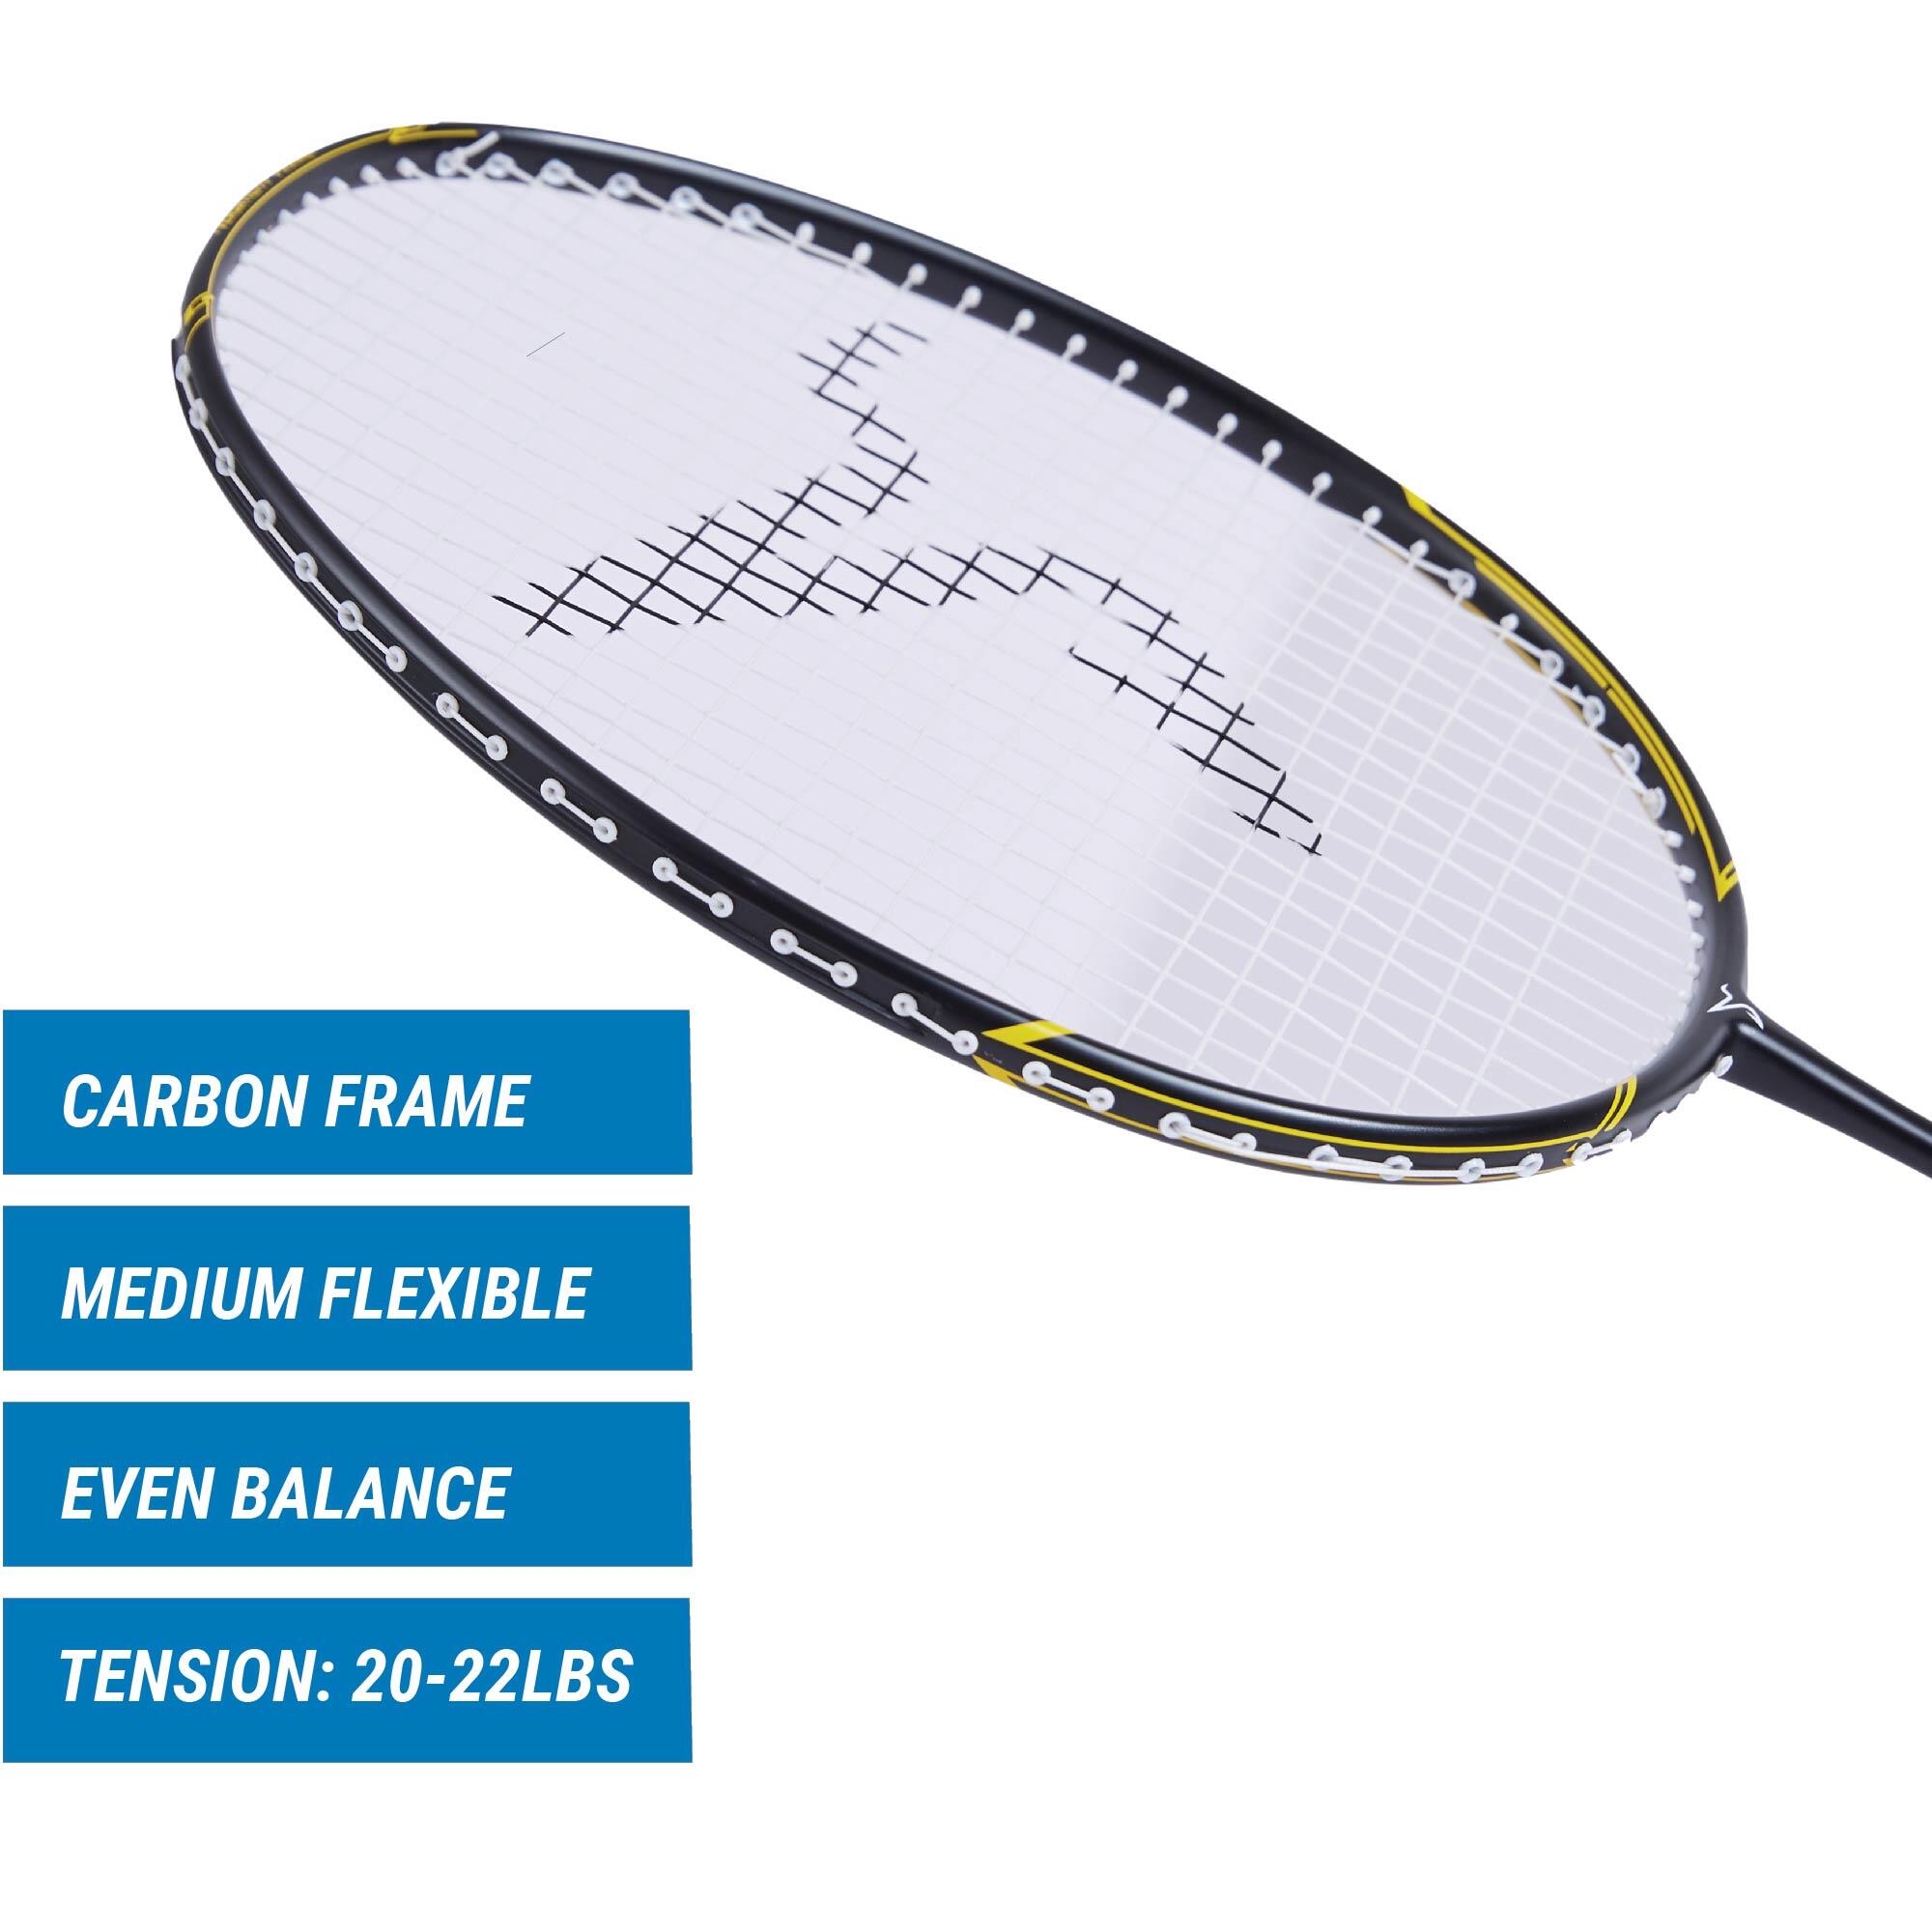 Badminton Racket - BR 500 Black/Yellow - PERFLY